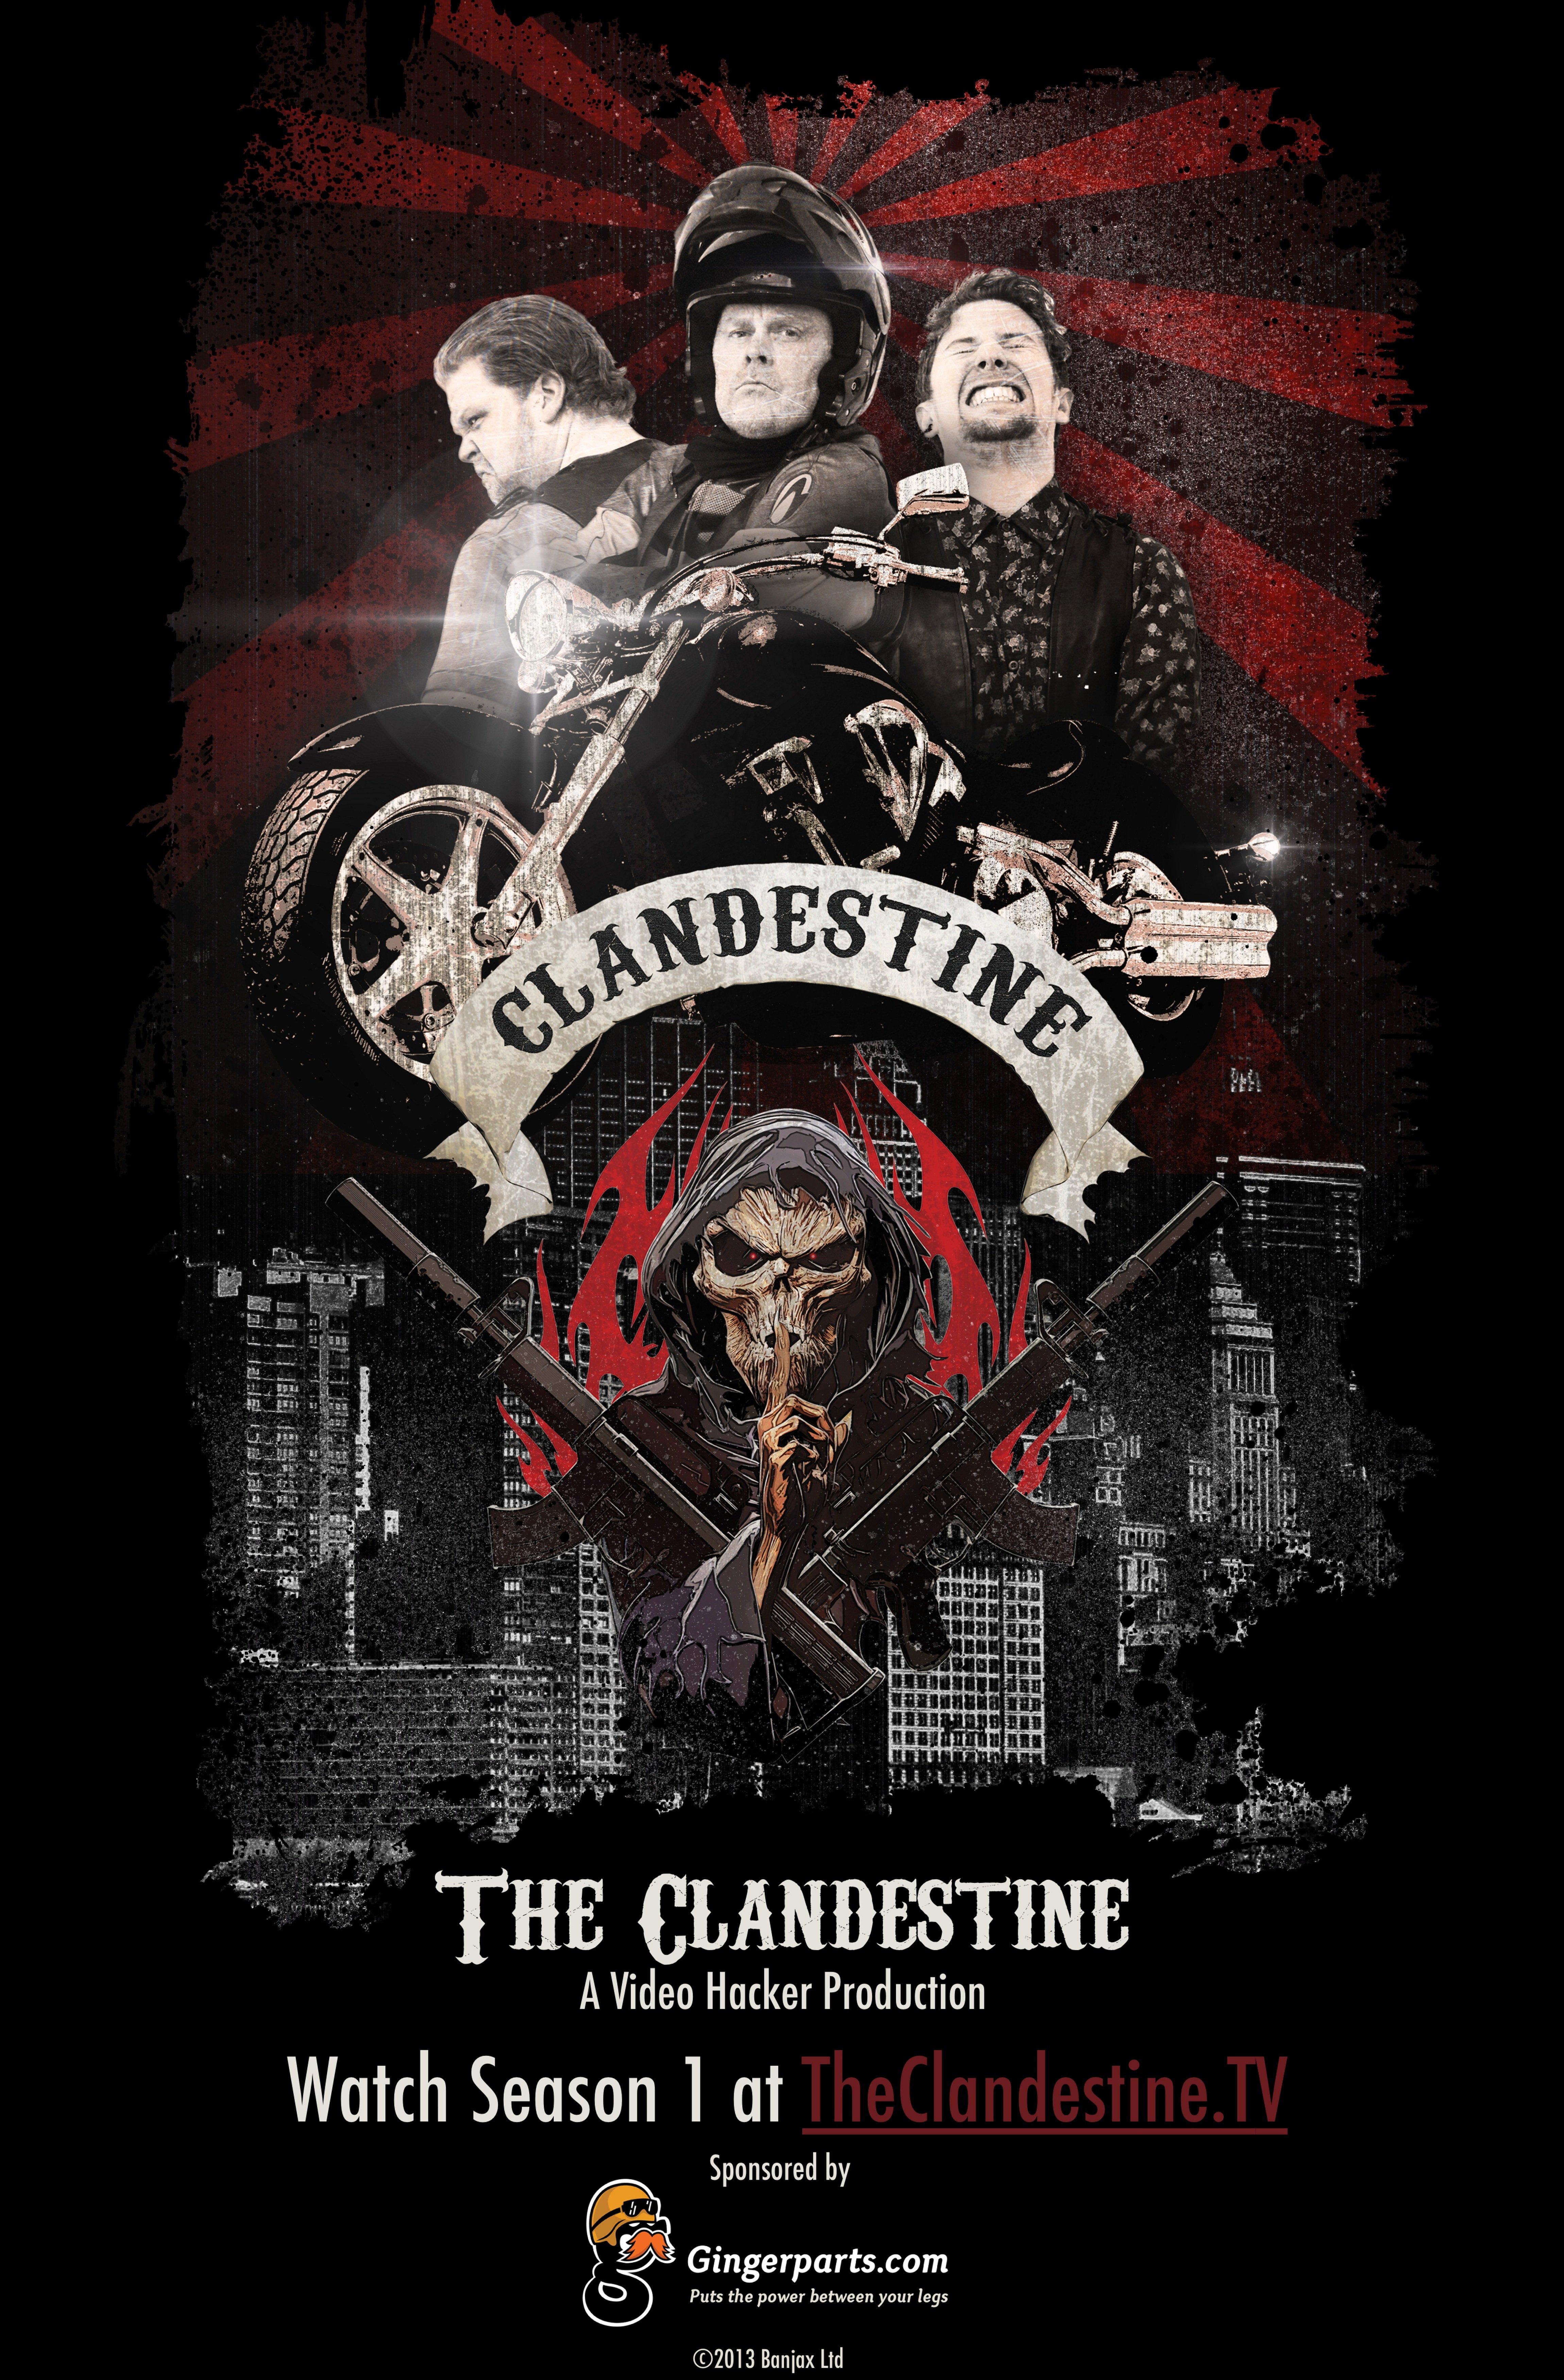 The Clandestine